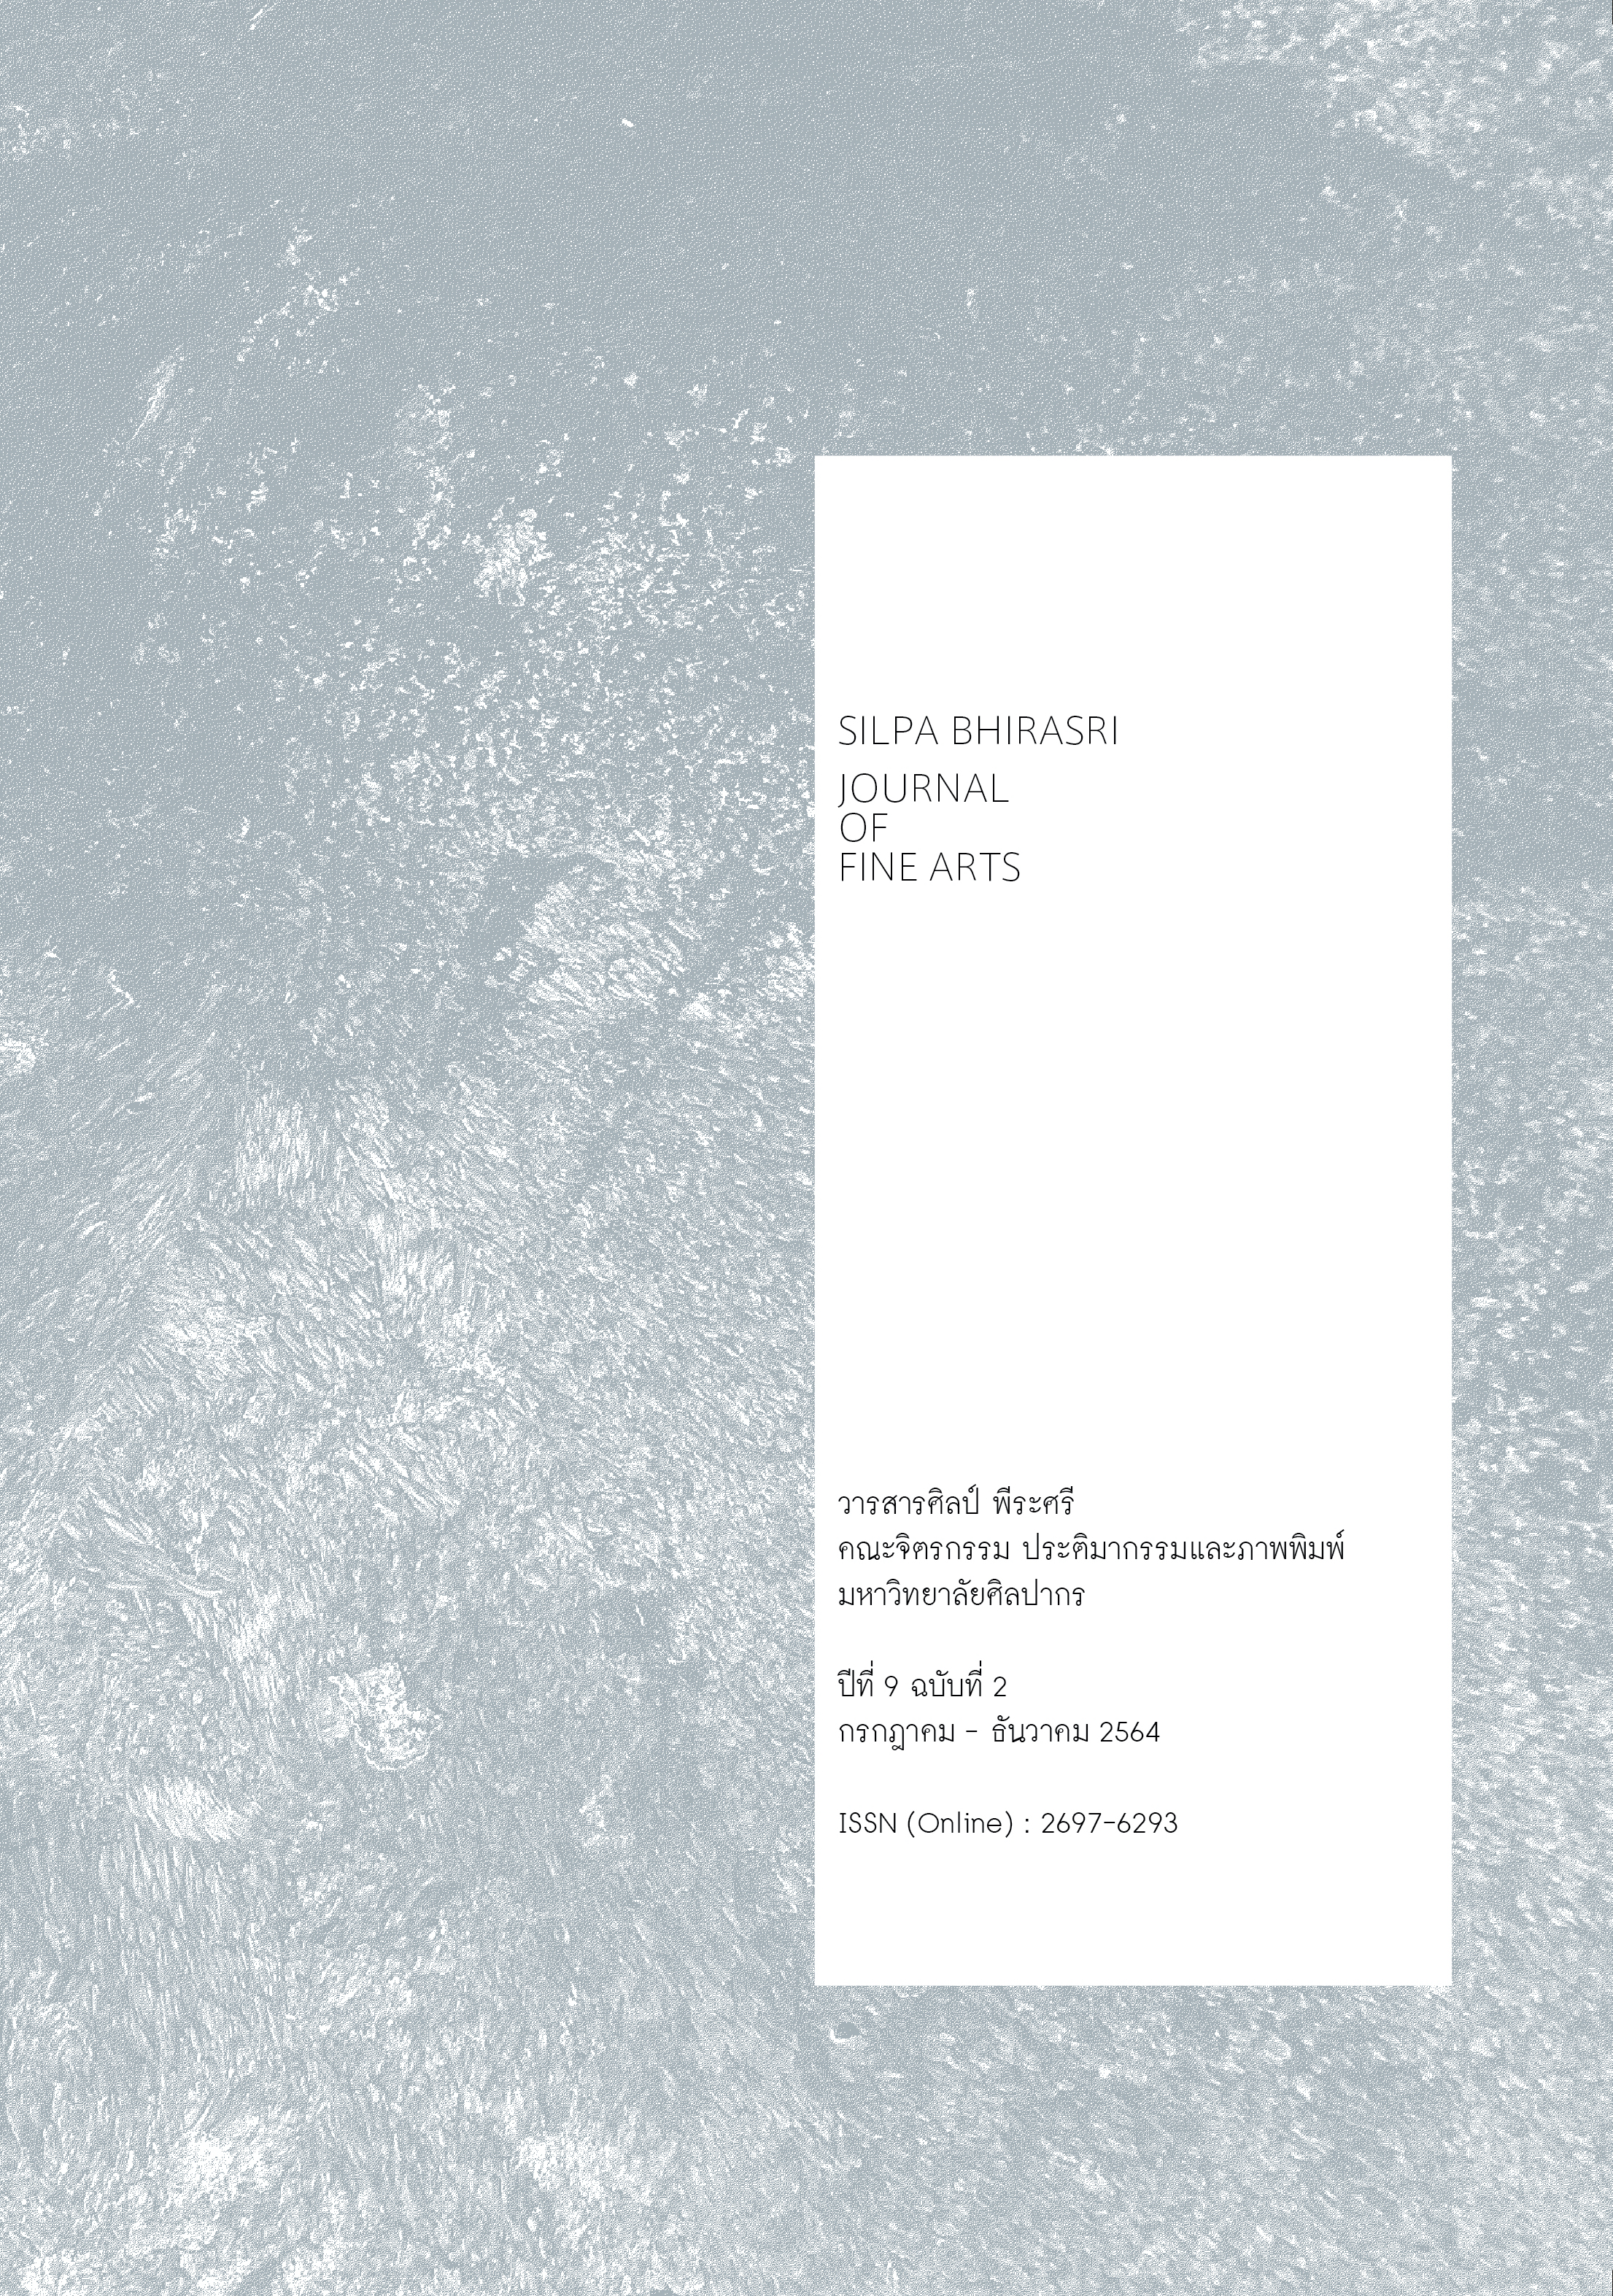 					View Vol. 9 No. 2 (2564): Silpa Bhirasri Journal of fine arts
				